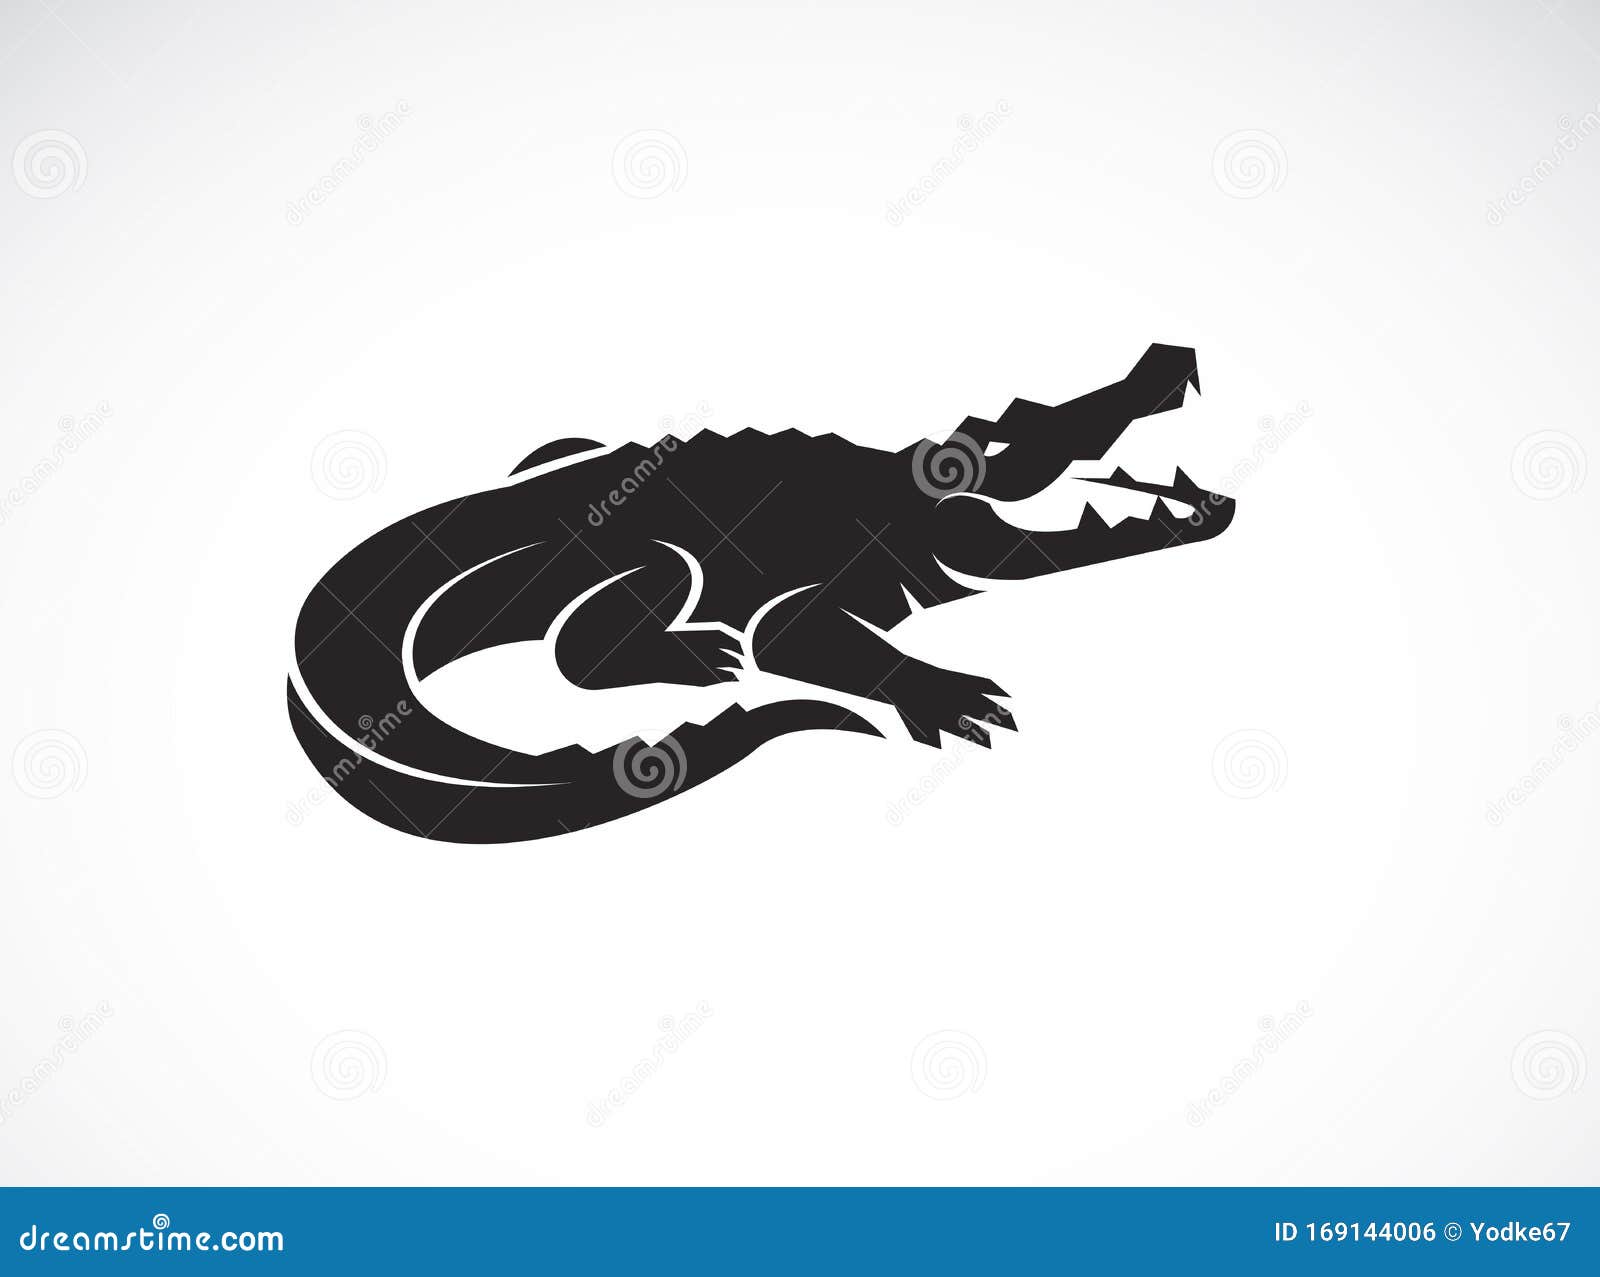 Download Vector Of Crocodile Design On White Background. Wild ...